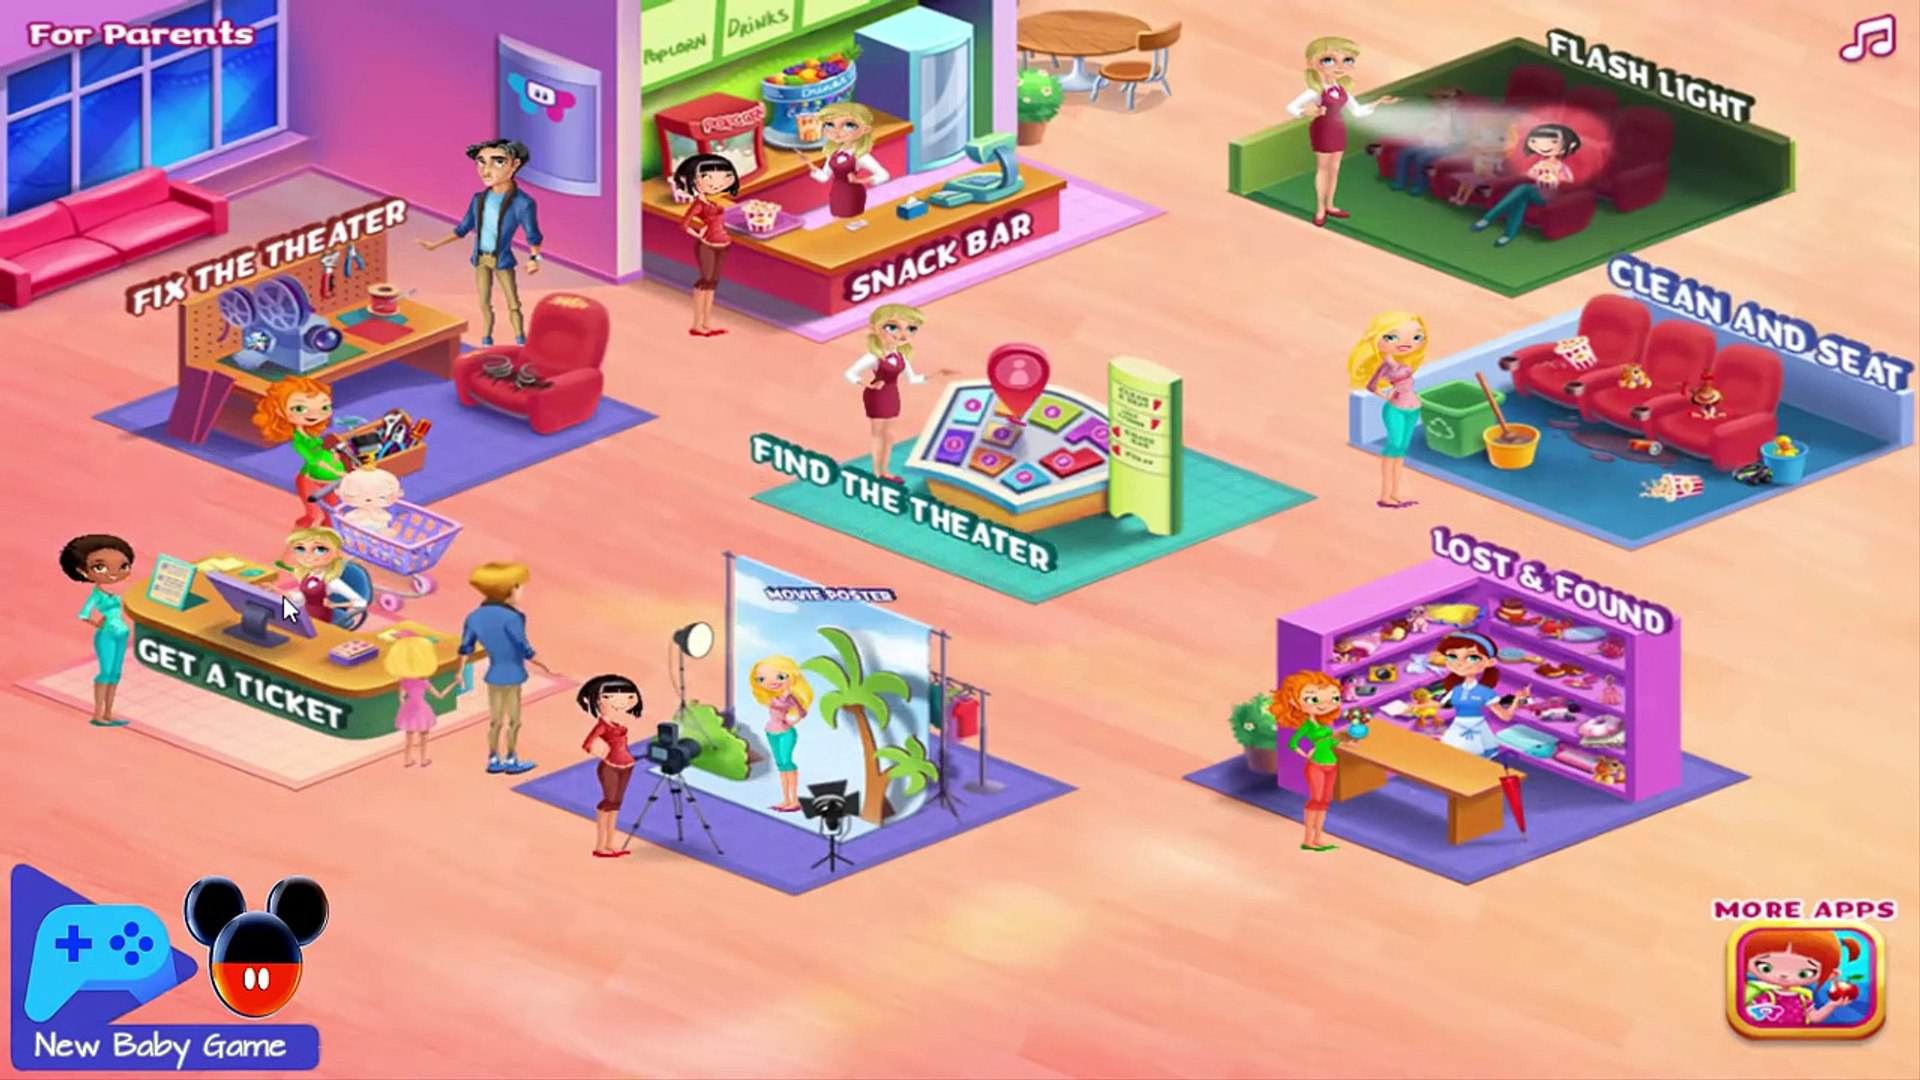 Kids Movie Night - Android gameplay TabTale Movie apps free kids best